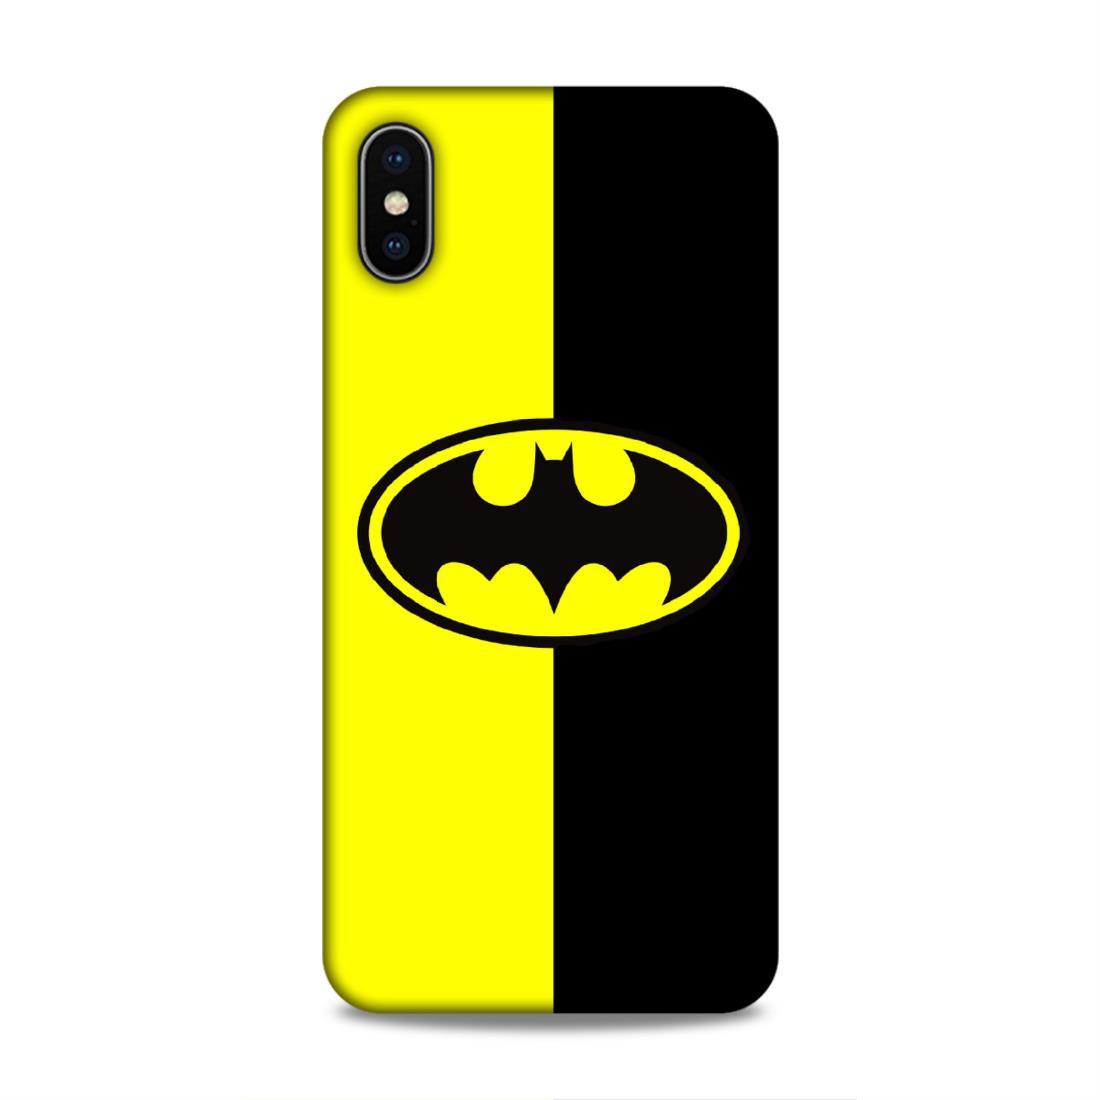 Batman Balck Yellow Hard Back Case For Apple iPhone XS Max